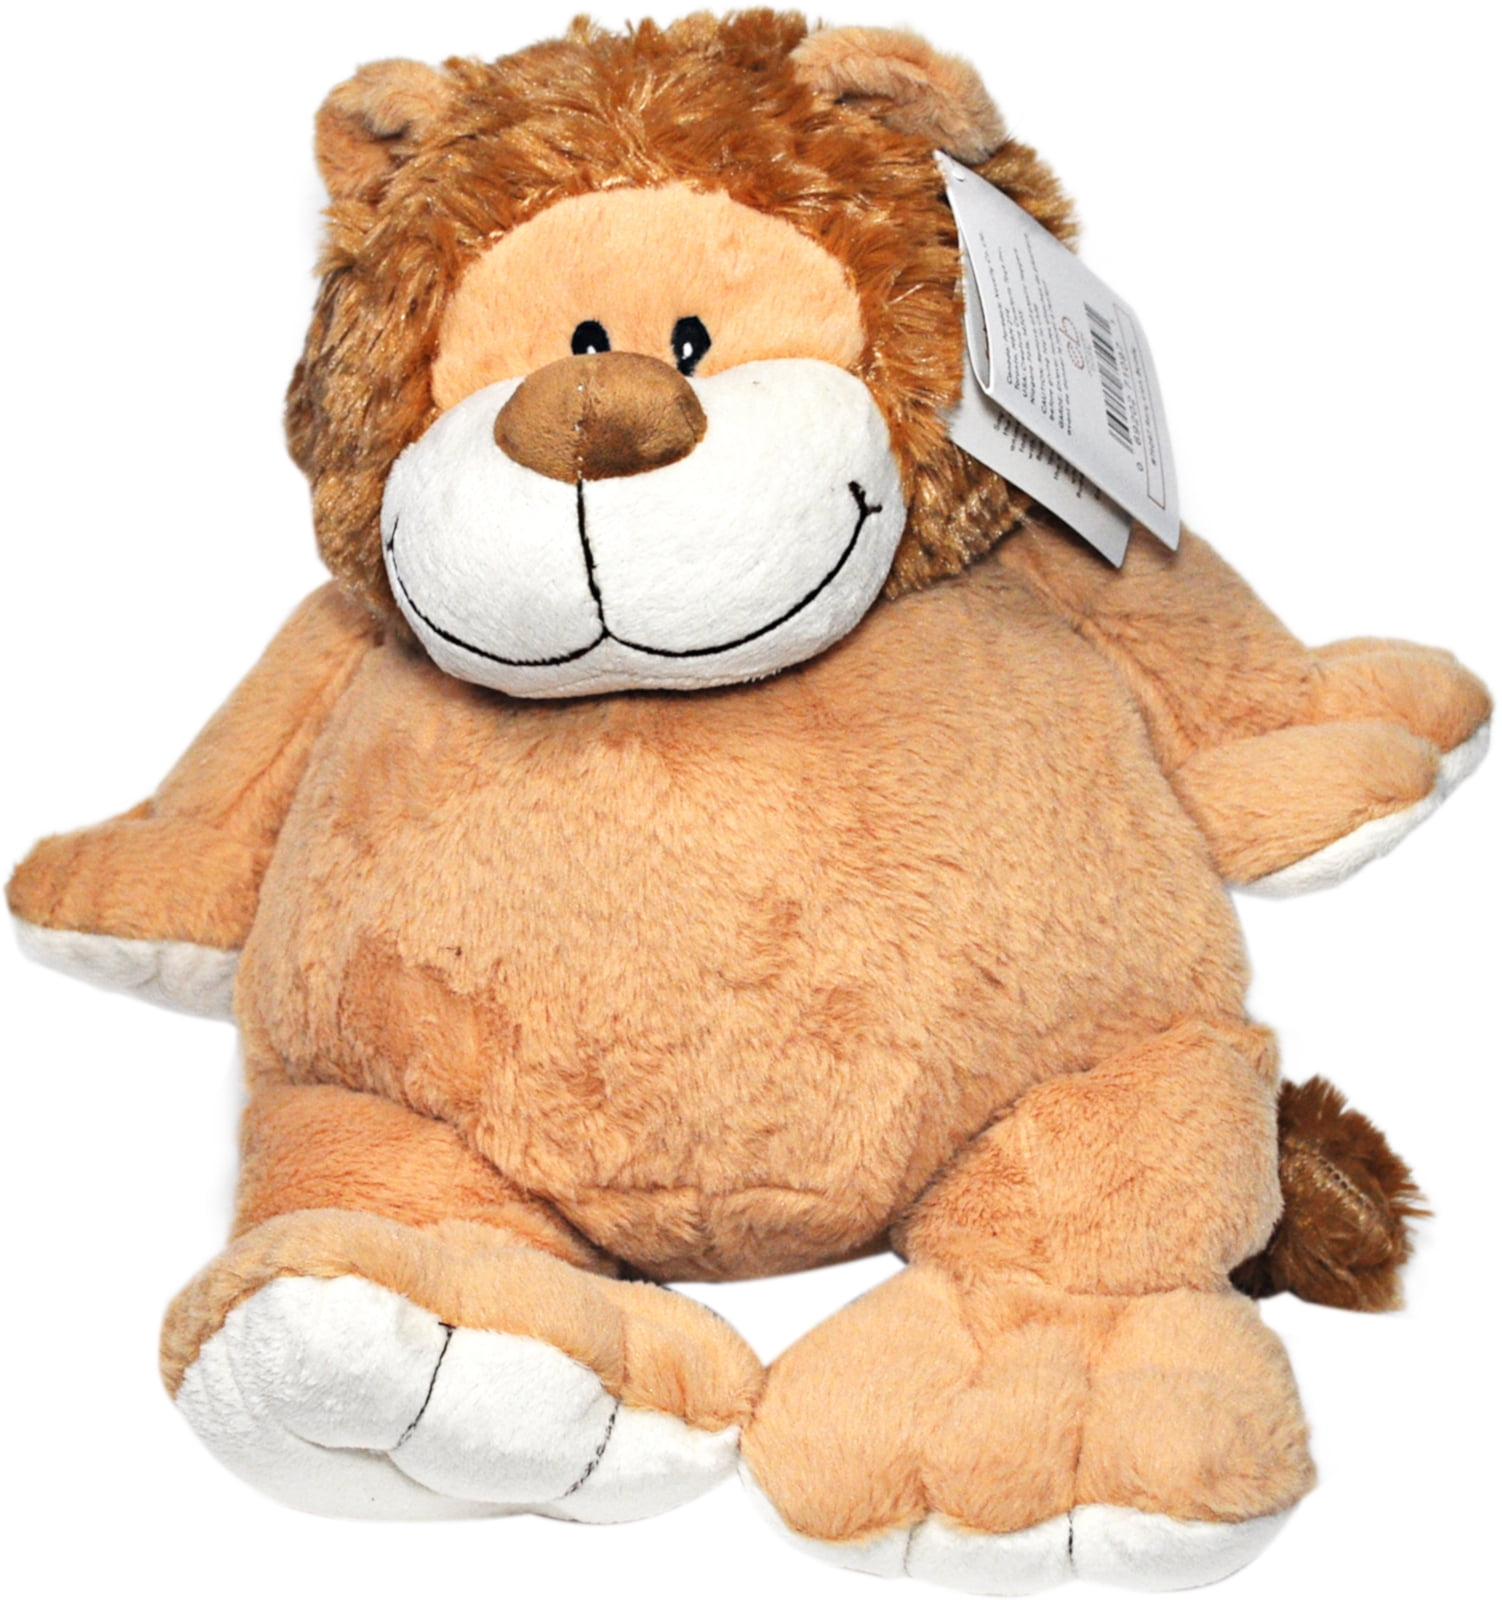 stuffed lion walmart